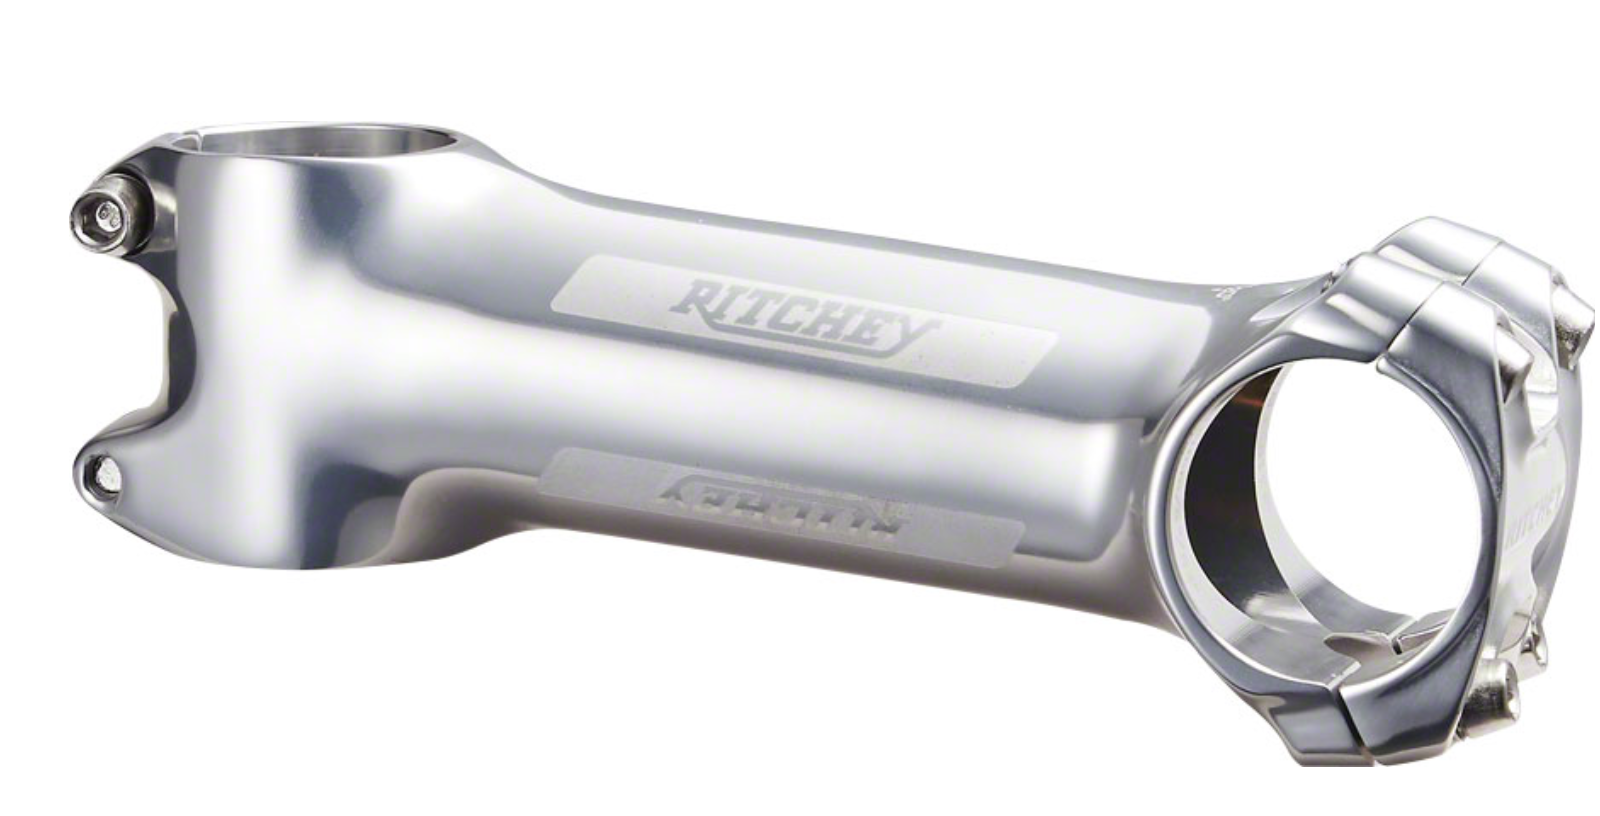 Ritchey Logic Ritchey Classic C220 Stem - 31.8mm, -6 Degree, Aluminum, Polished Silver